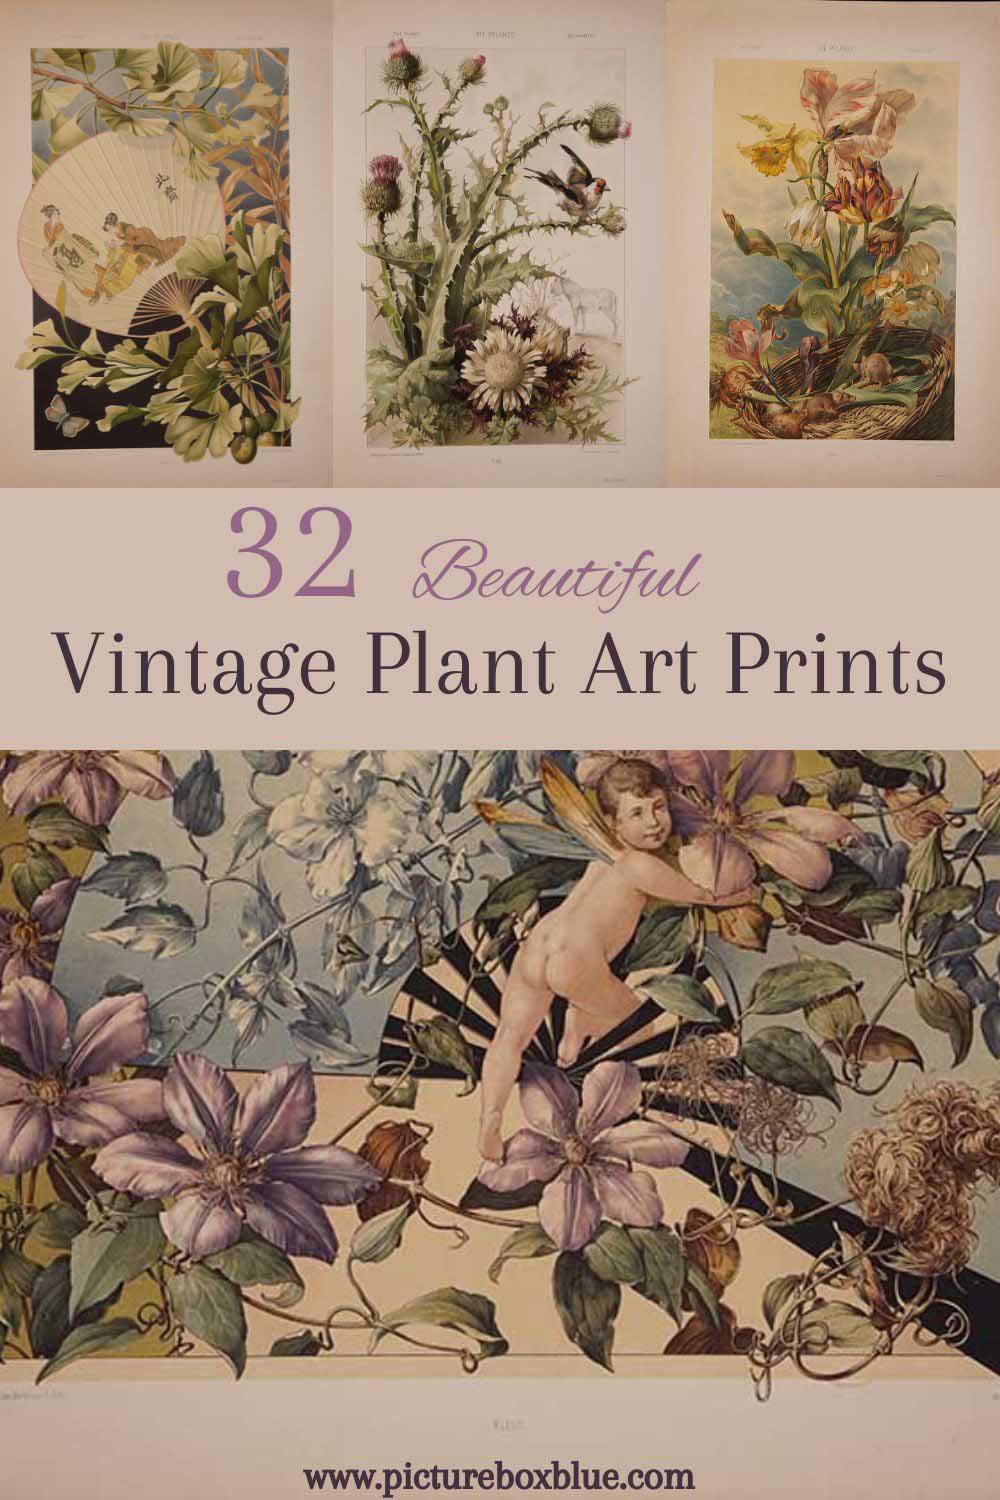 Vintage plant art prints volume one